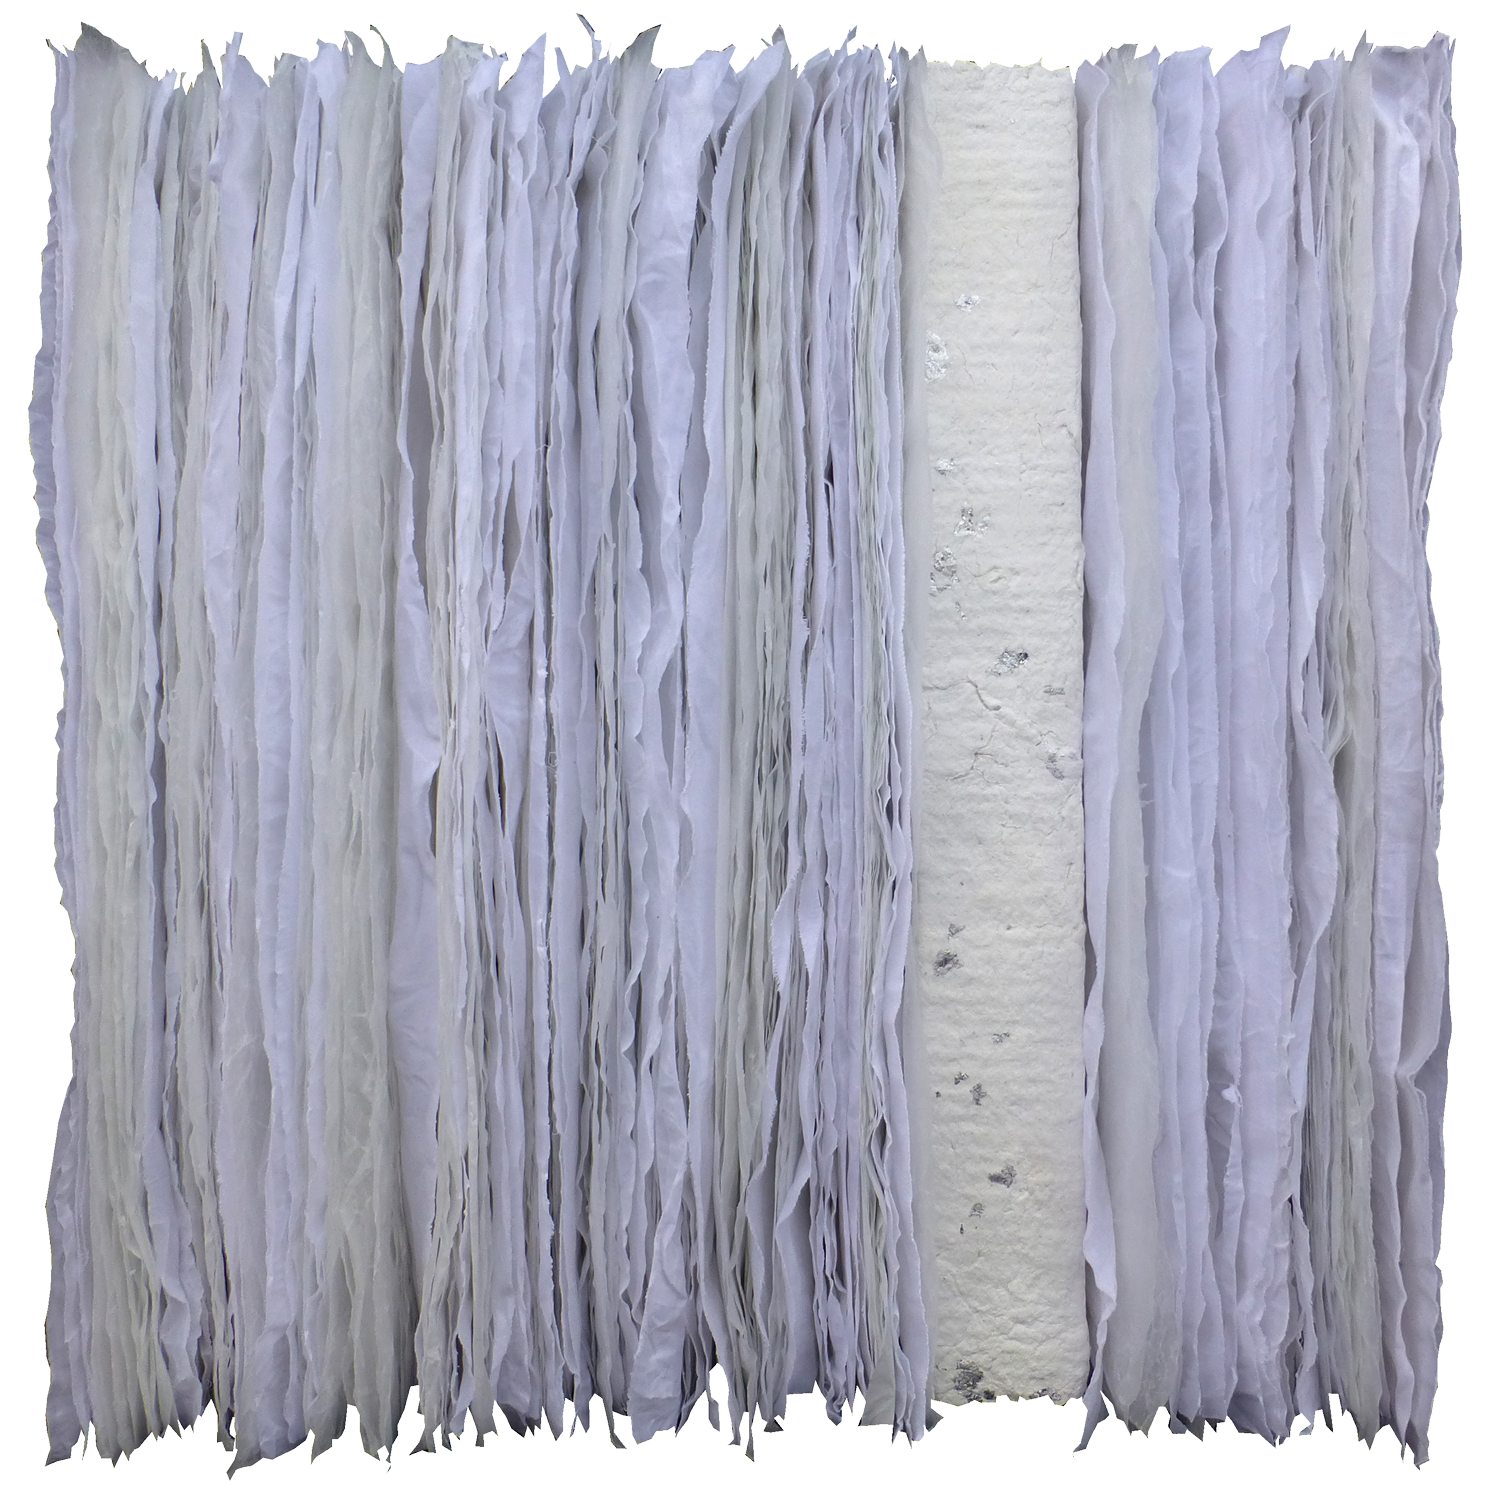 Glatsch Engiadinais | Papyrus, Handgeschöpftes Papier, Cotton, Paraffin | 80 x 80 x 20 cm